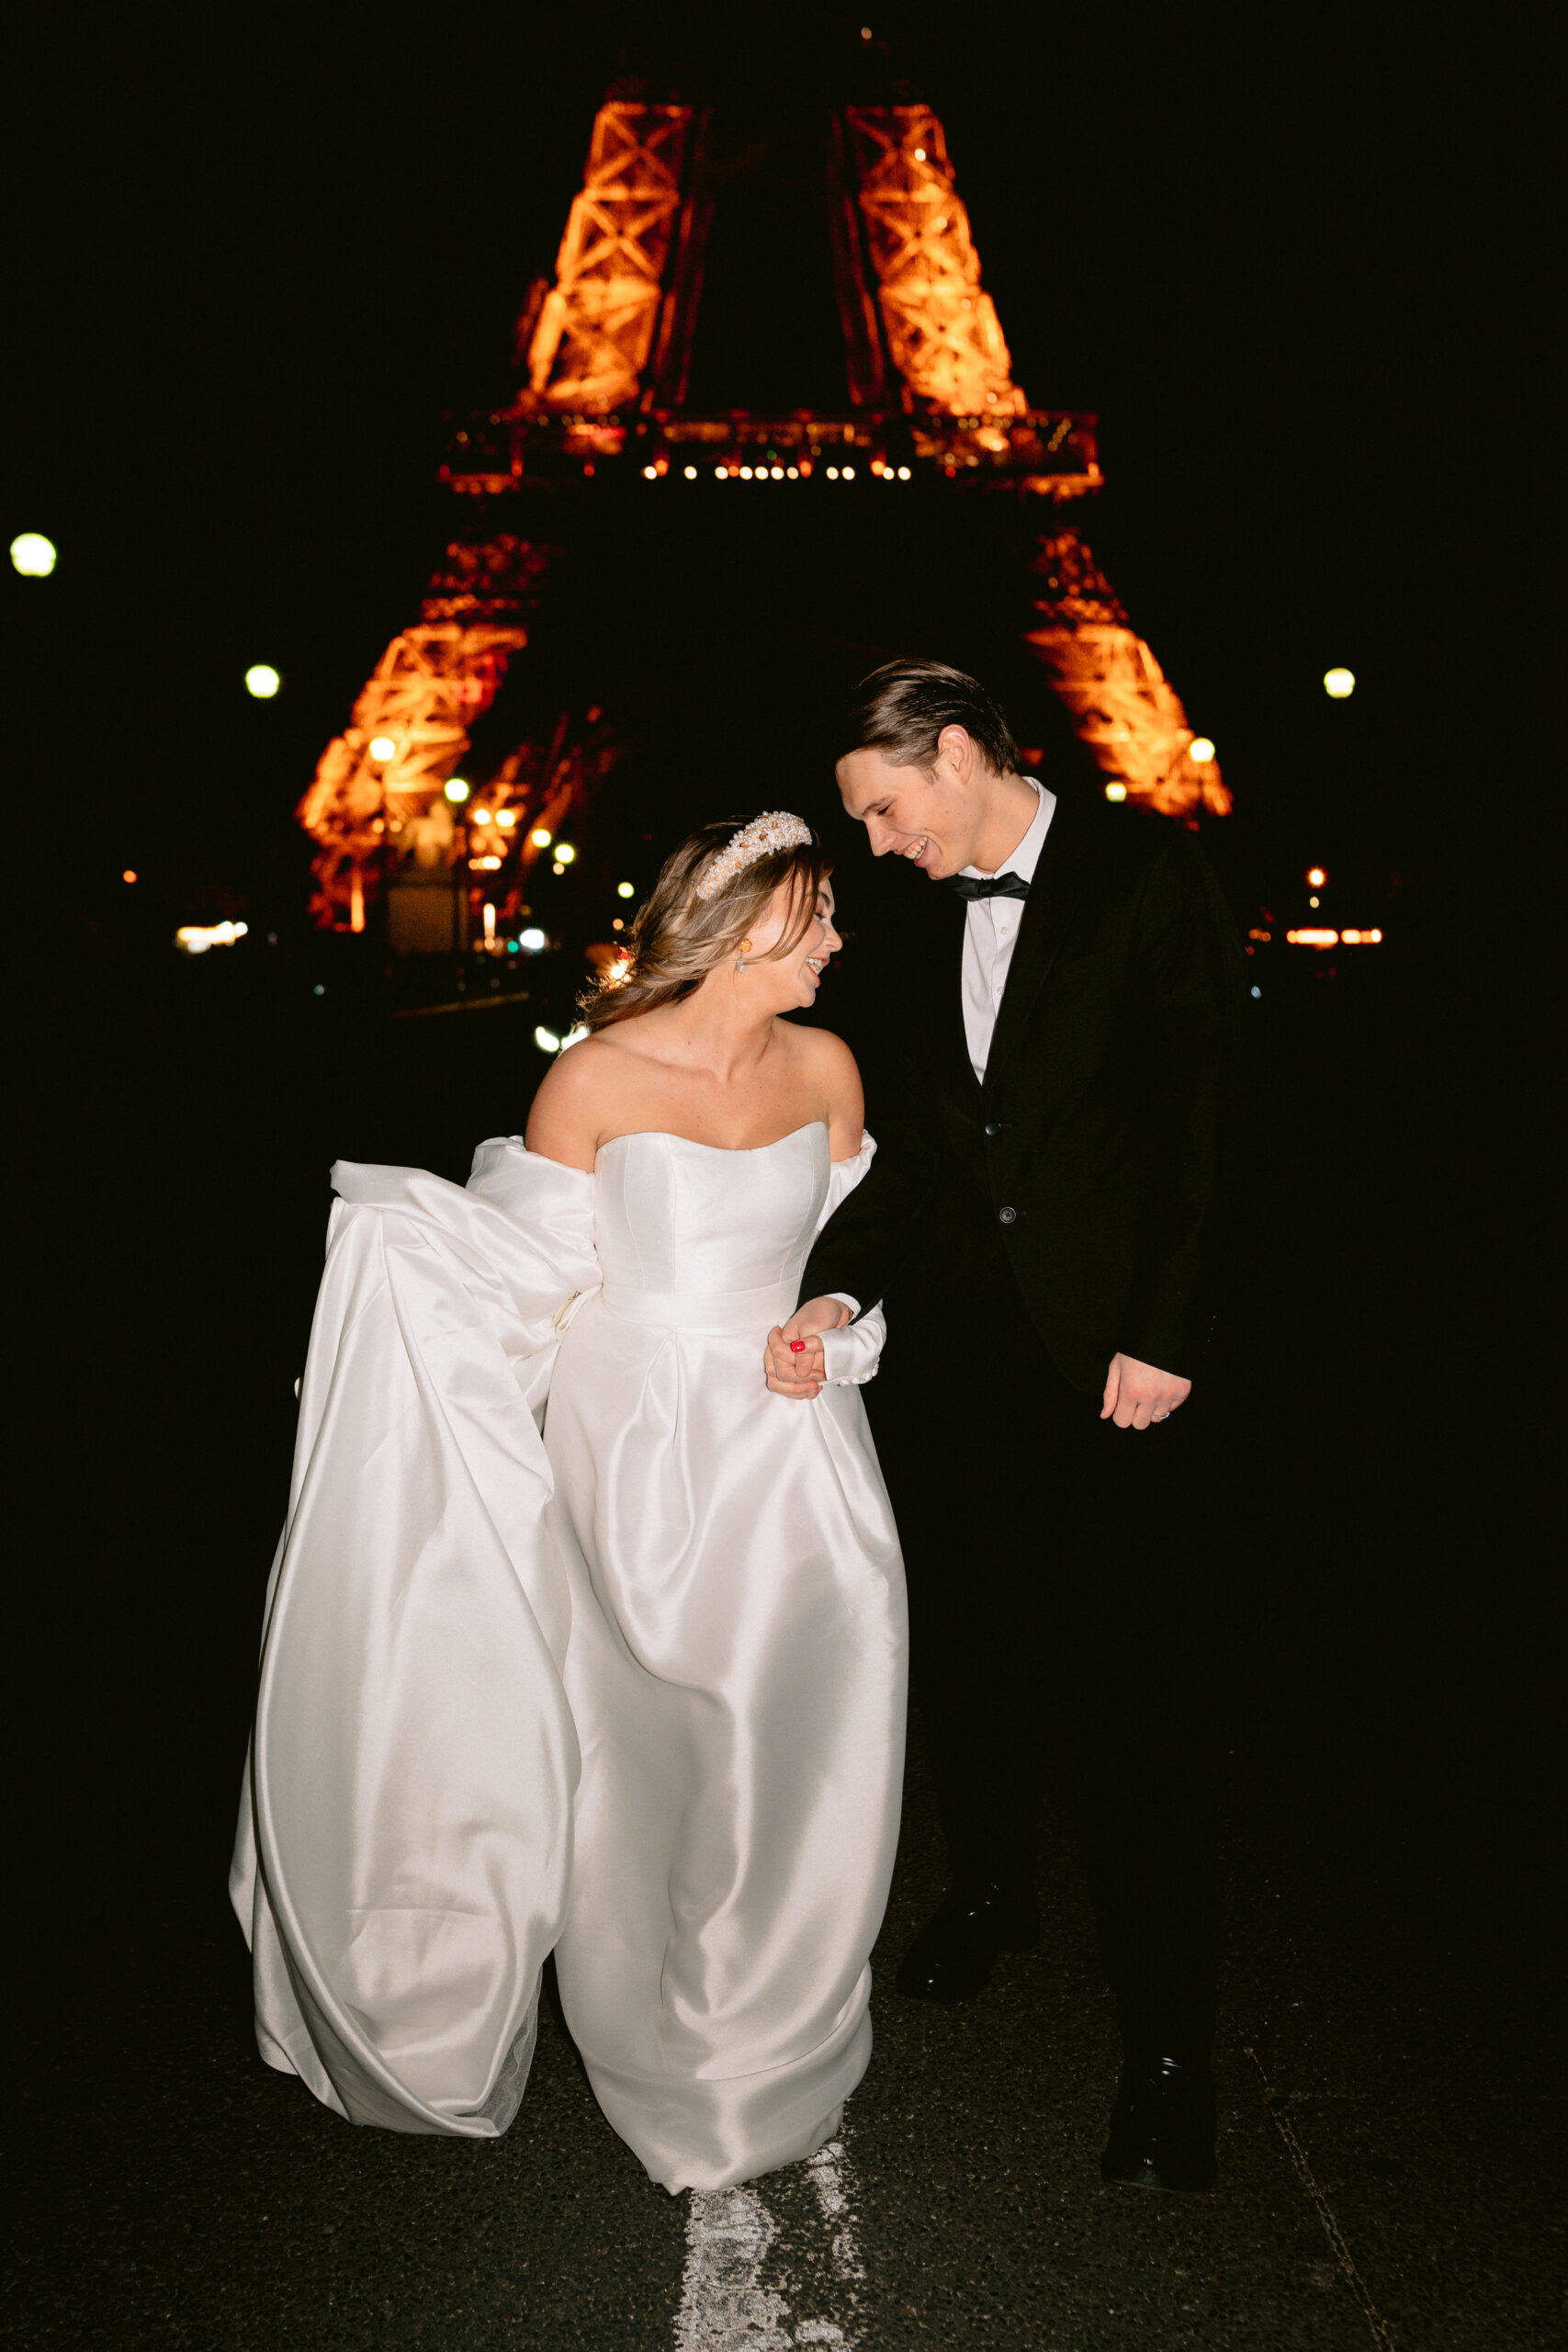 Paris Wedding Photographer. Destination Wedding Photographer. Paris Couple Shoot with the Eiffel Tower